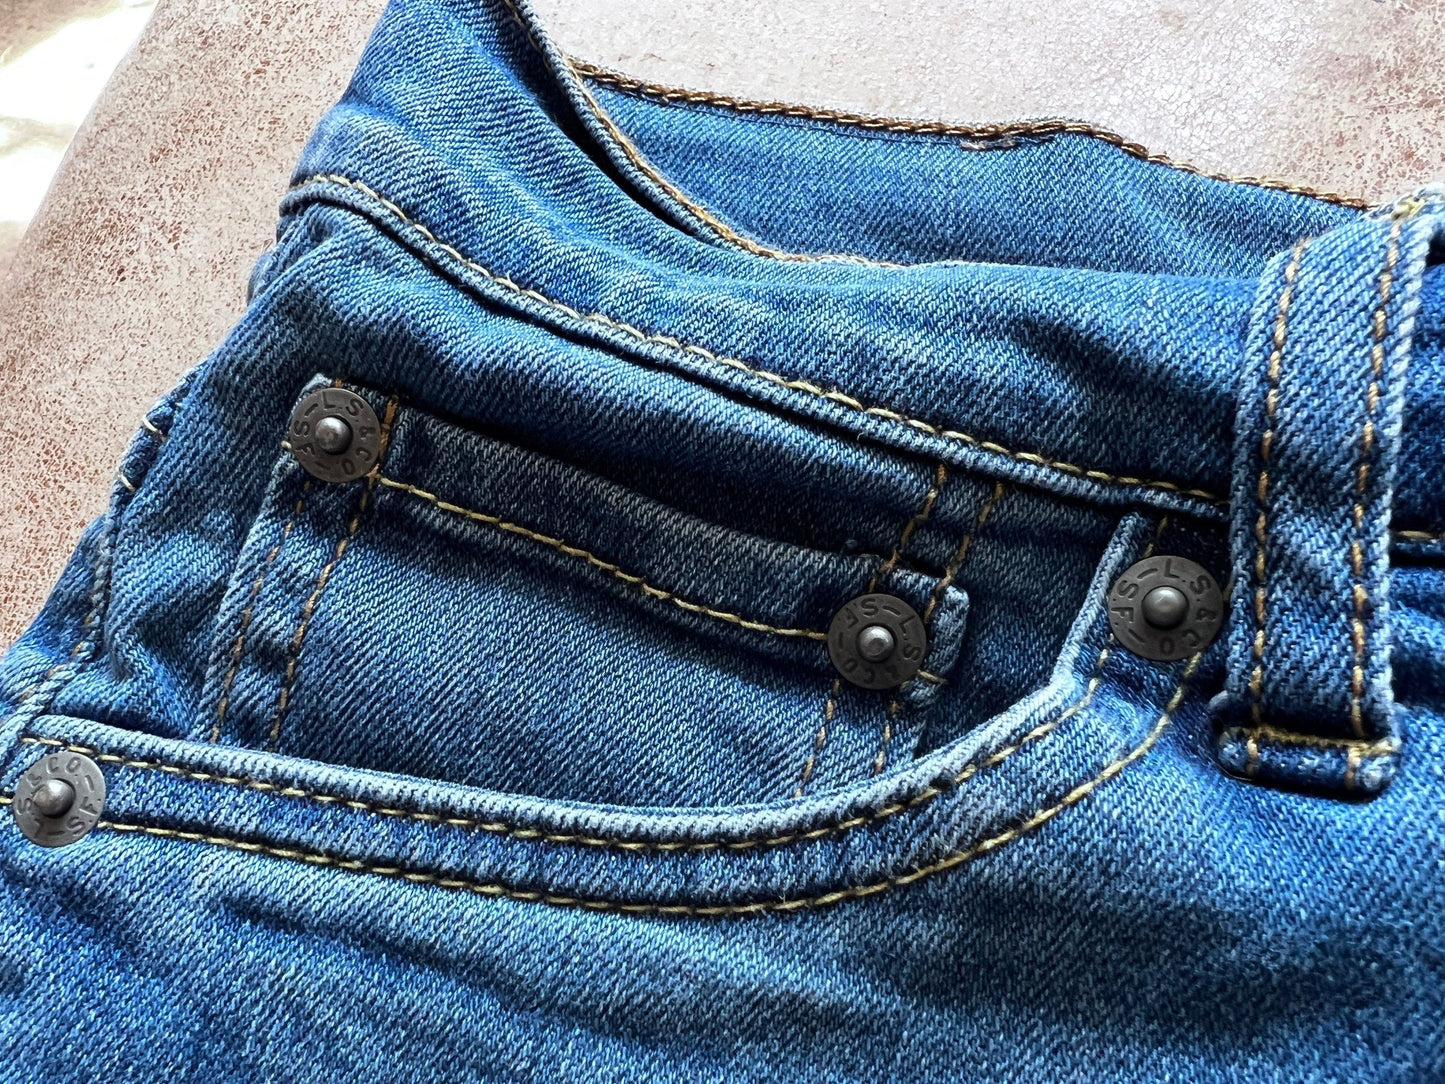 Vintage Denim Short Levi Cut Offs W27 - light stone wash denim shorts - Levi Jeans Cut Offs 502